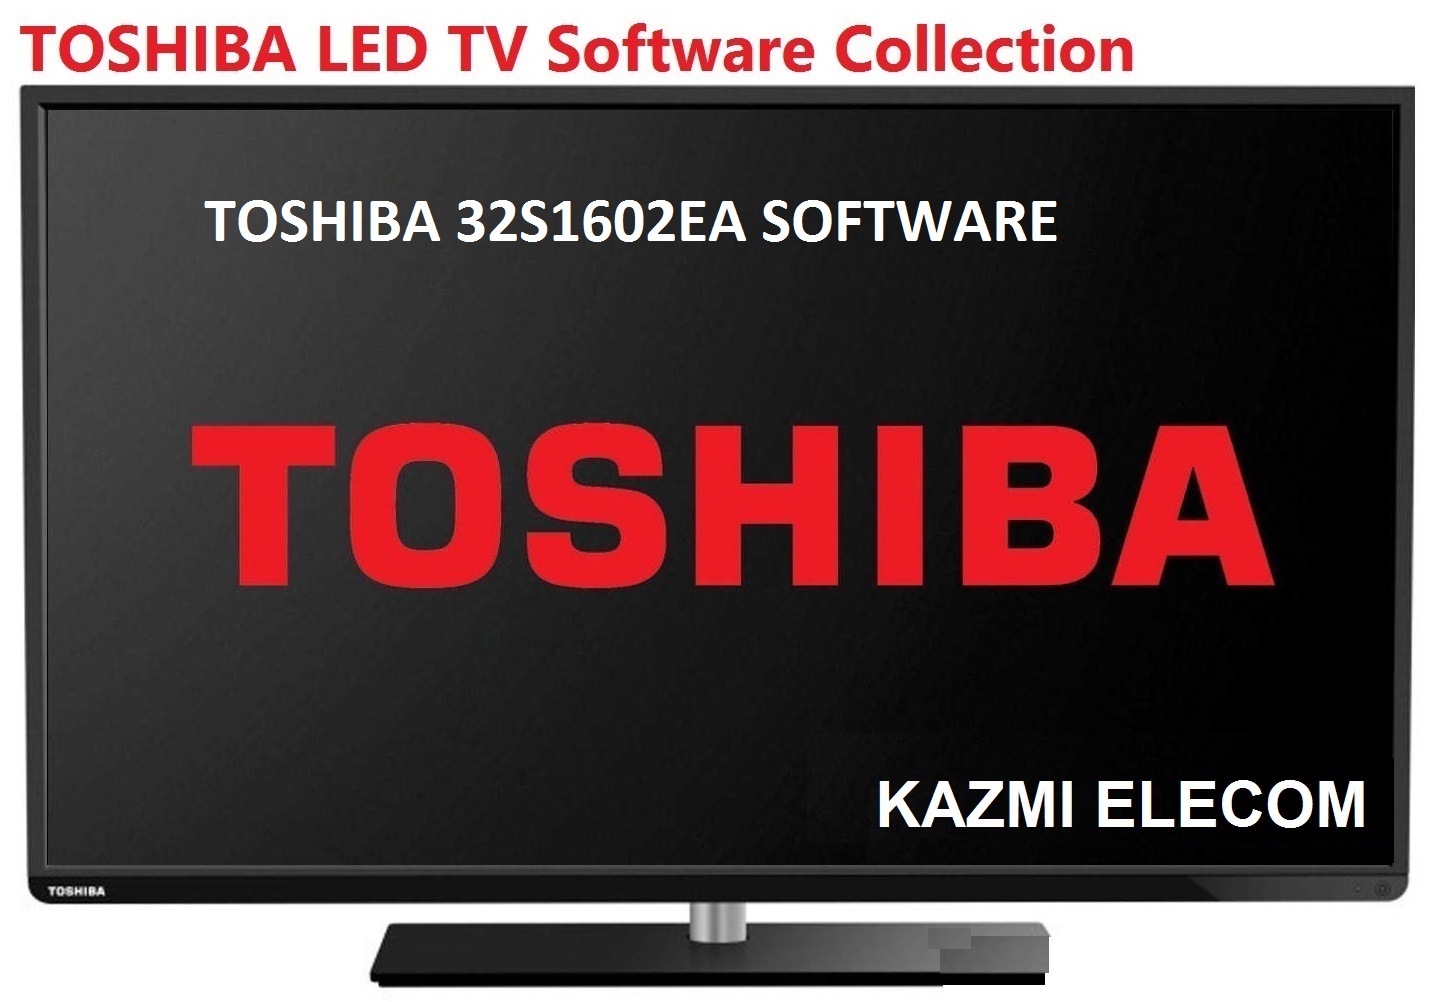 Toshiba 32S1602Ea